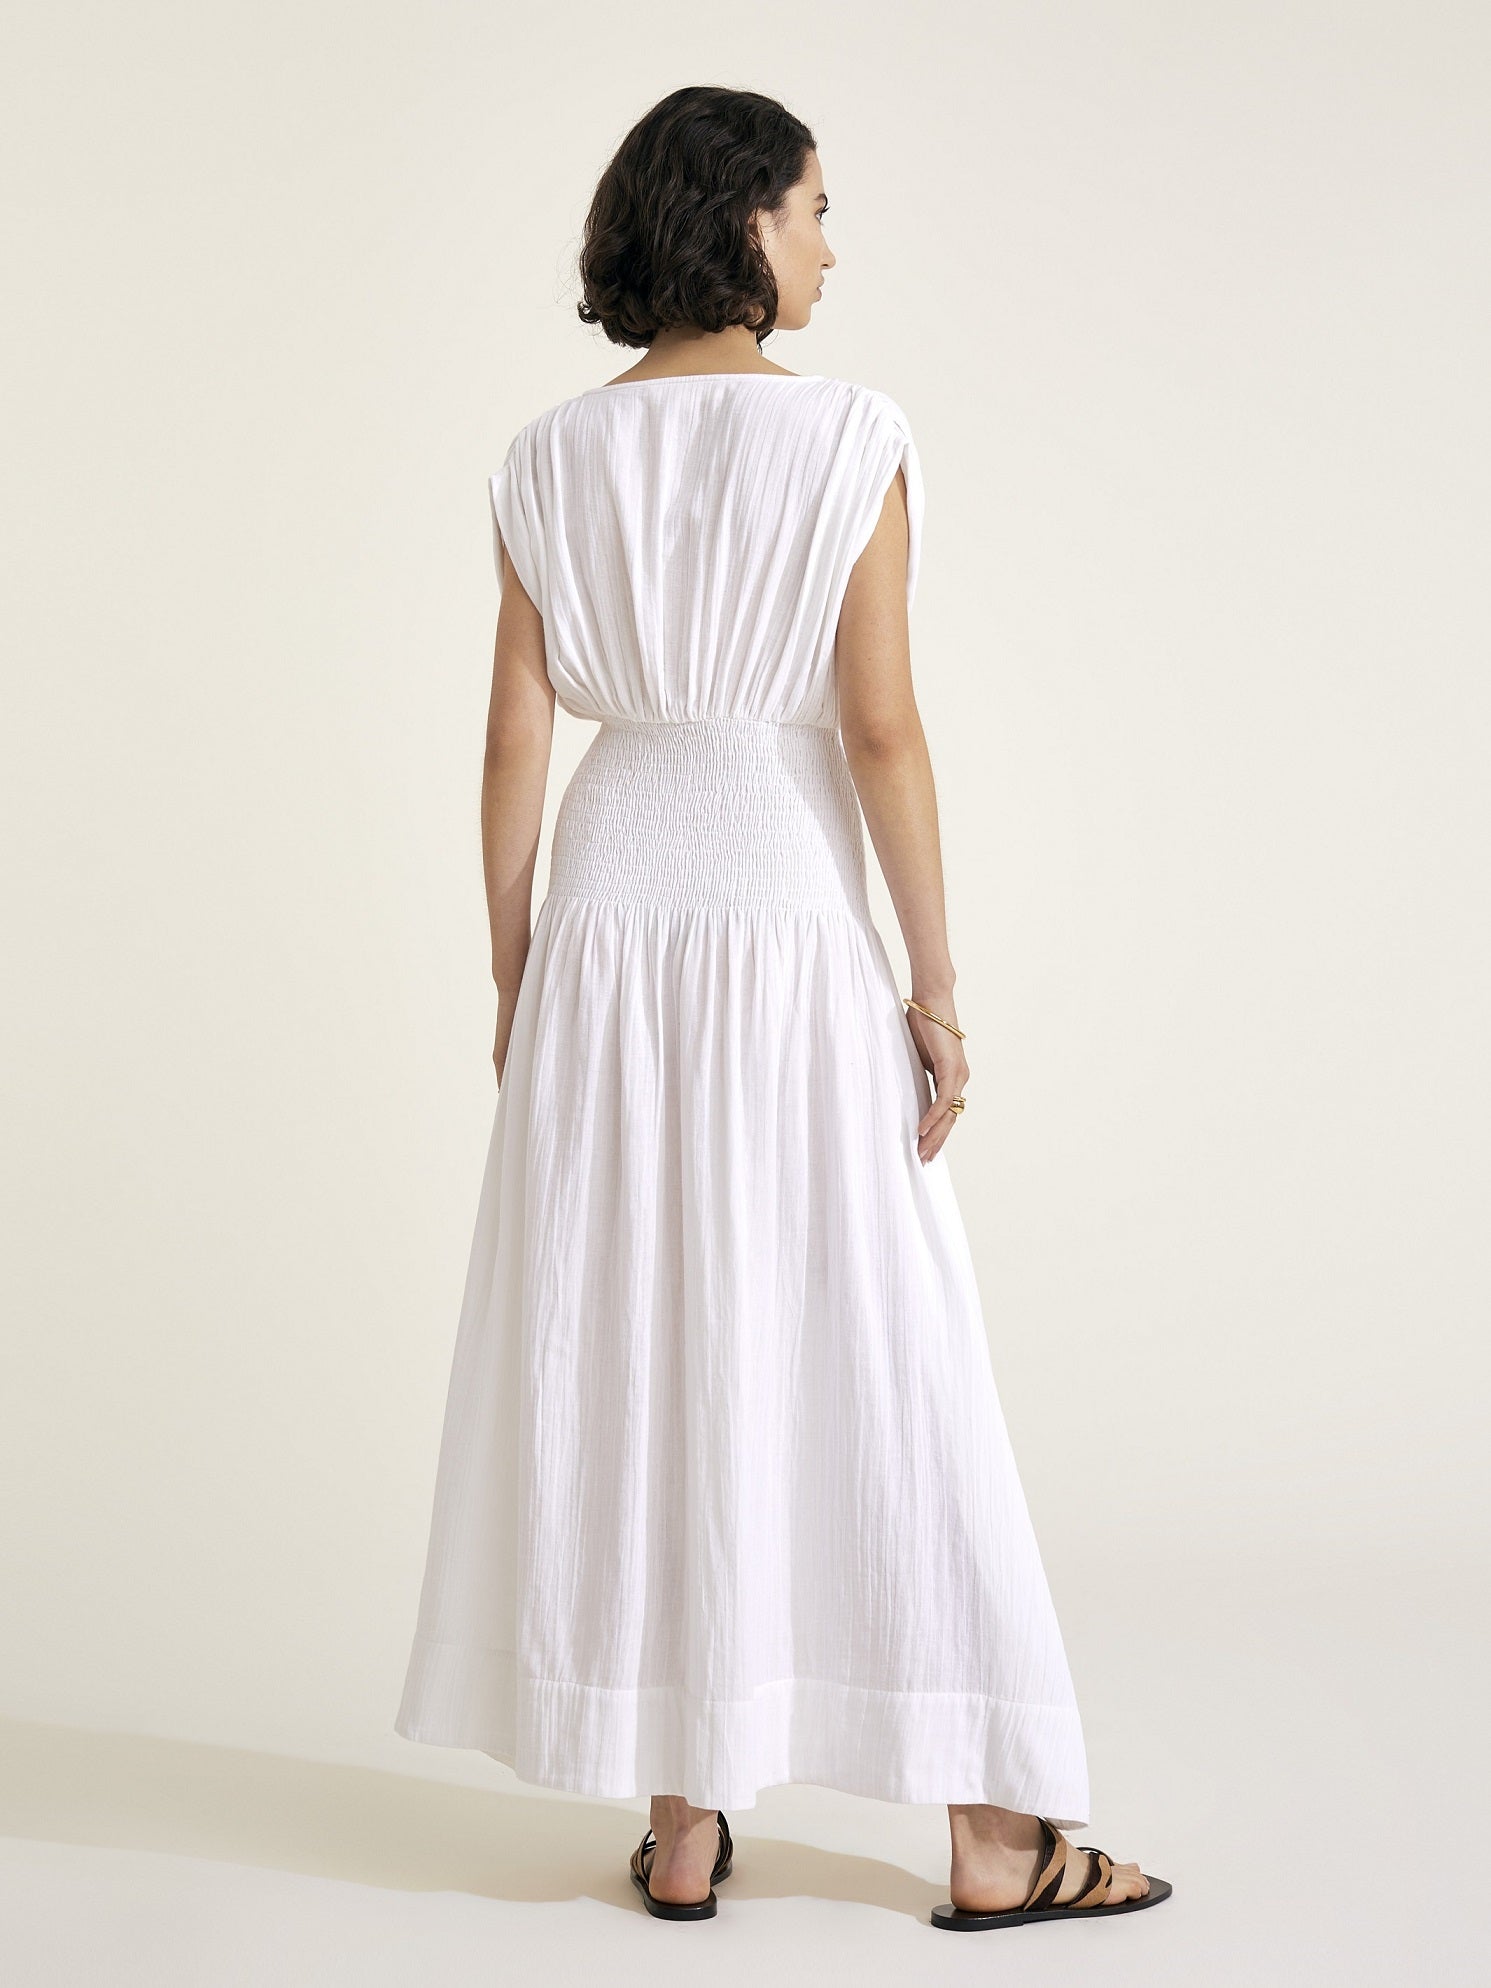 PENELOPE - White Cotton Dress - Mondo Corsini